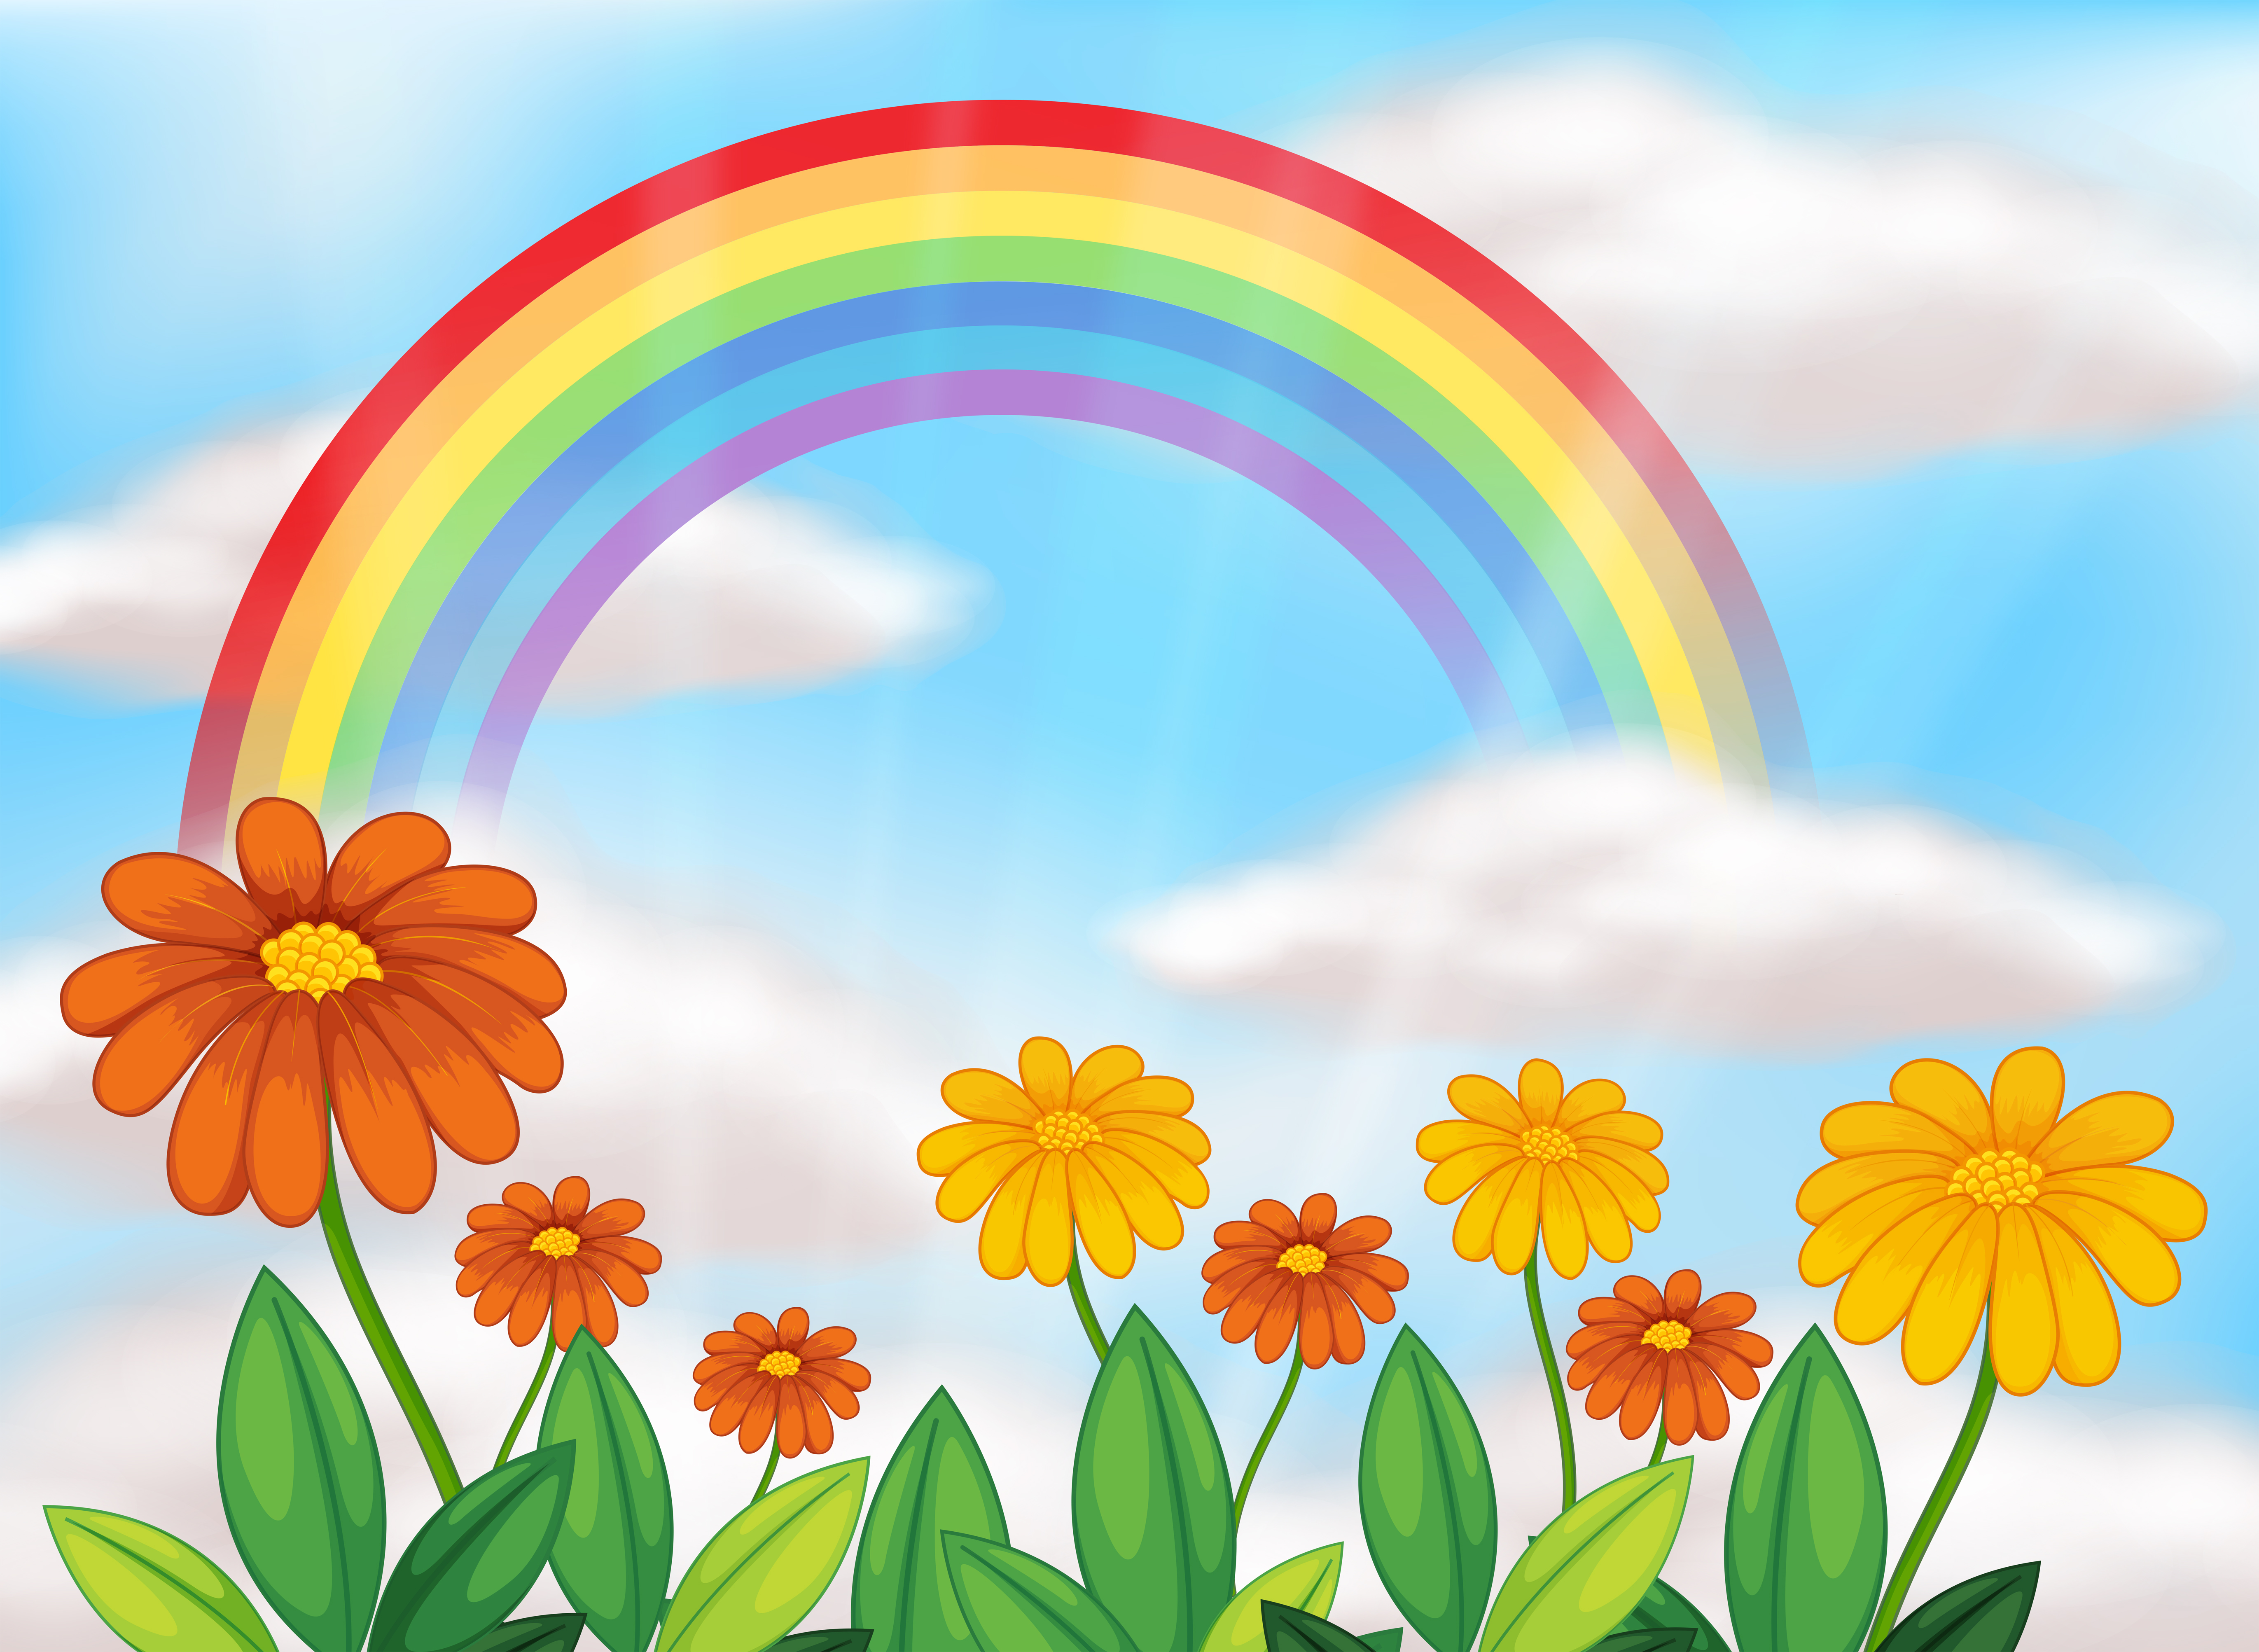 Flower Garden and Beautiful Rainbow 373874 Vector Art at Vecteezy